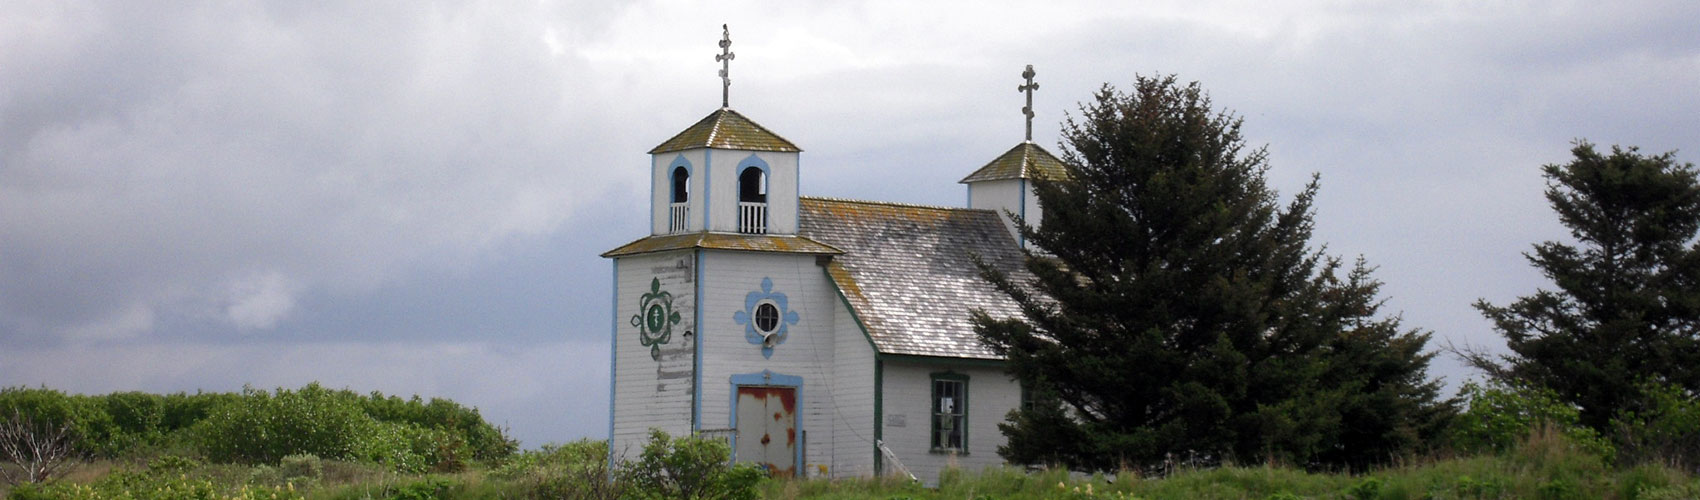 Russian Orthodox church in Alaska.